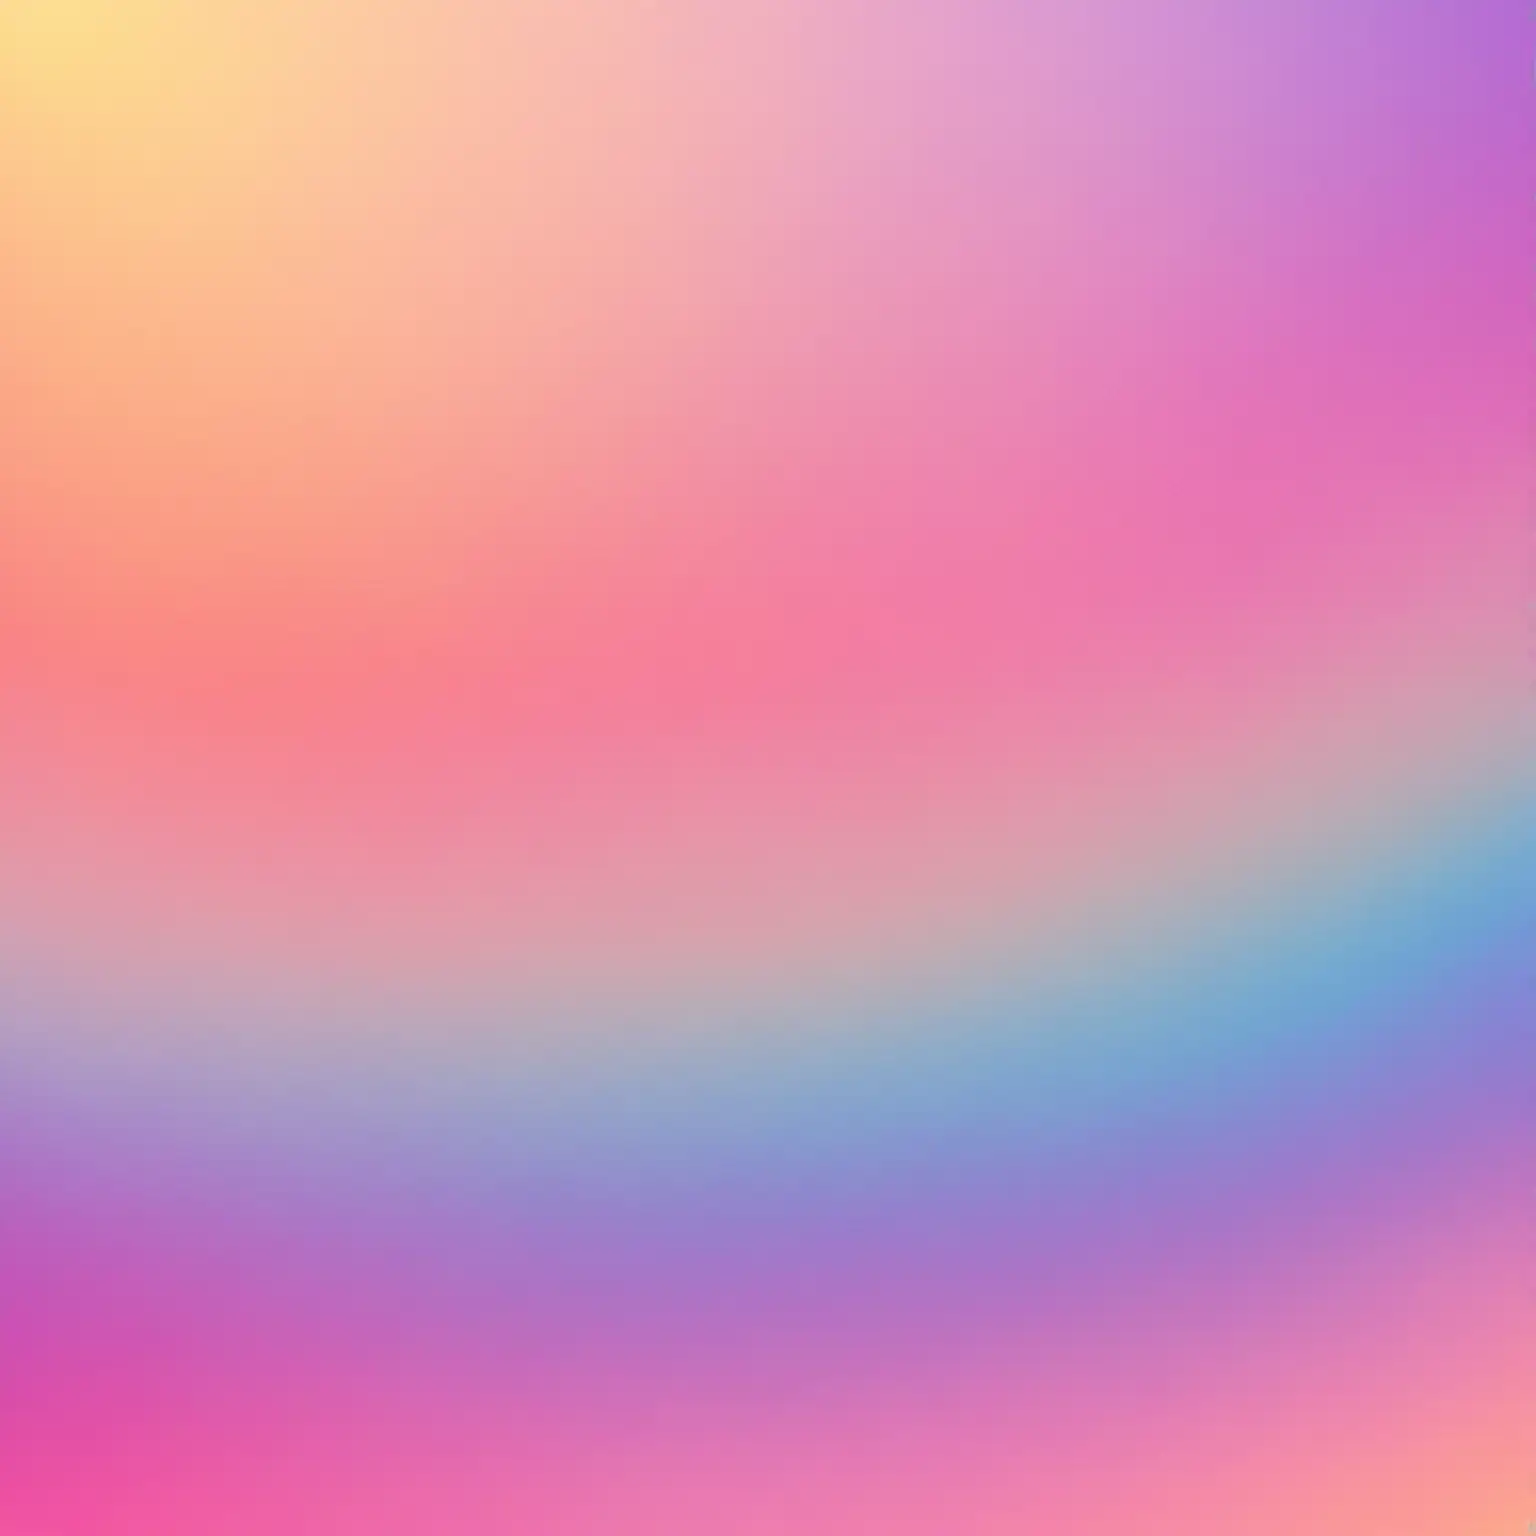 Vibrant MultiColored Gradient Background Illustration